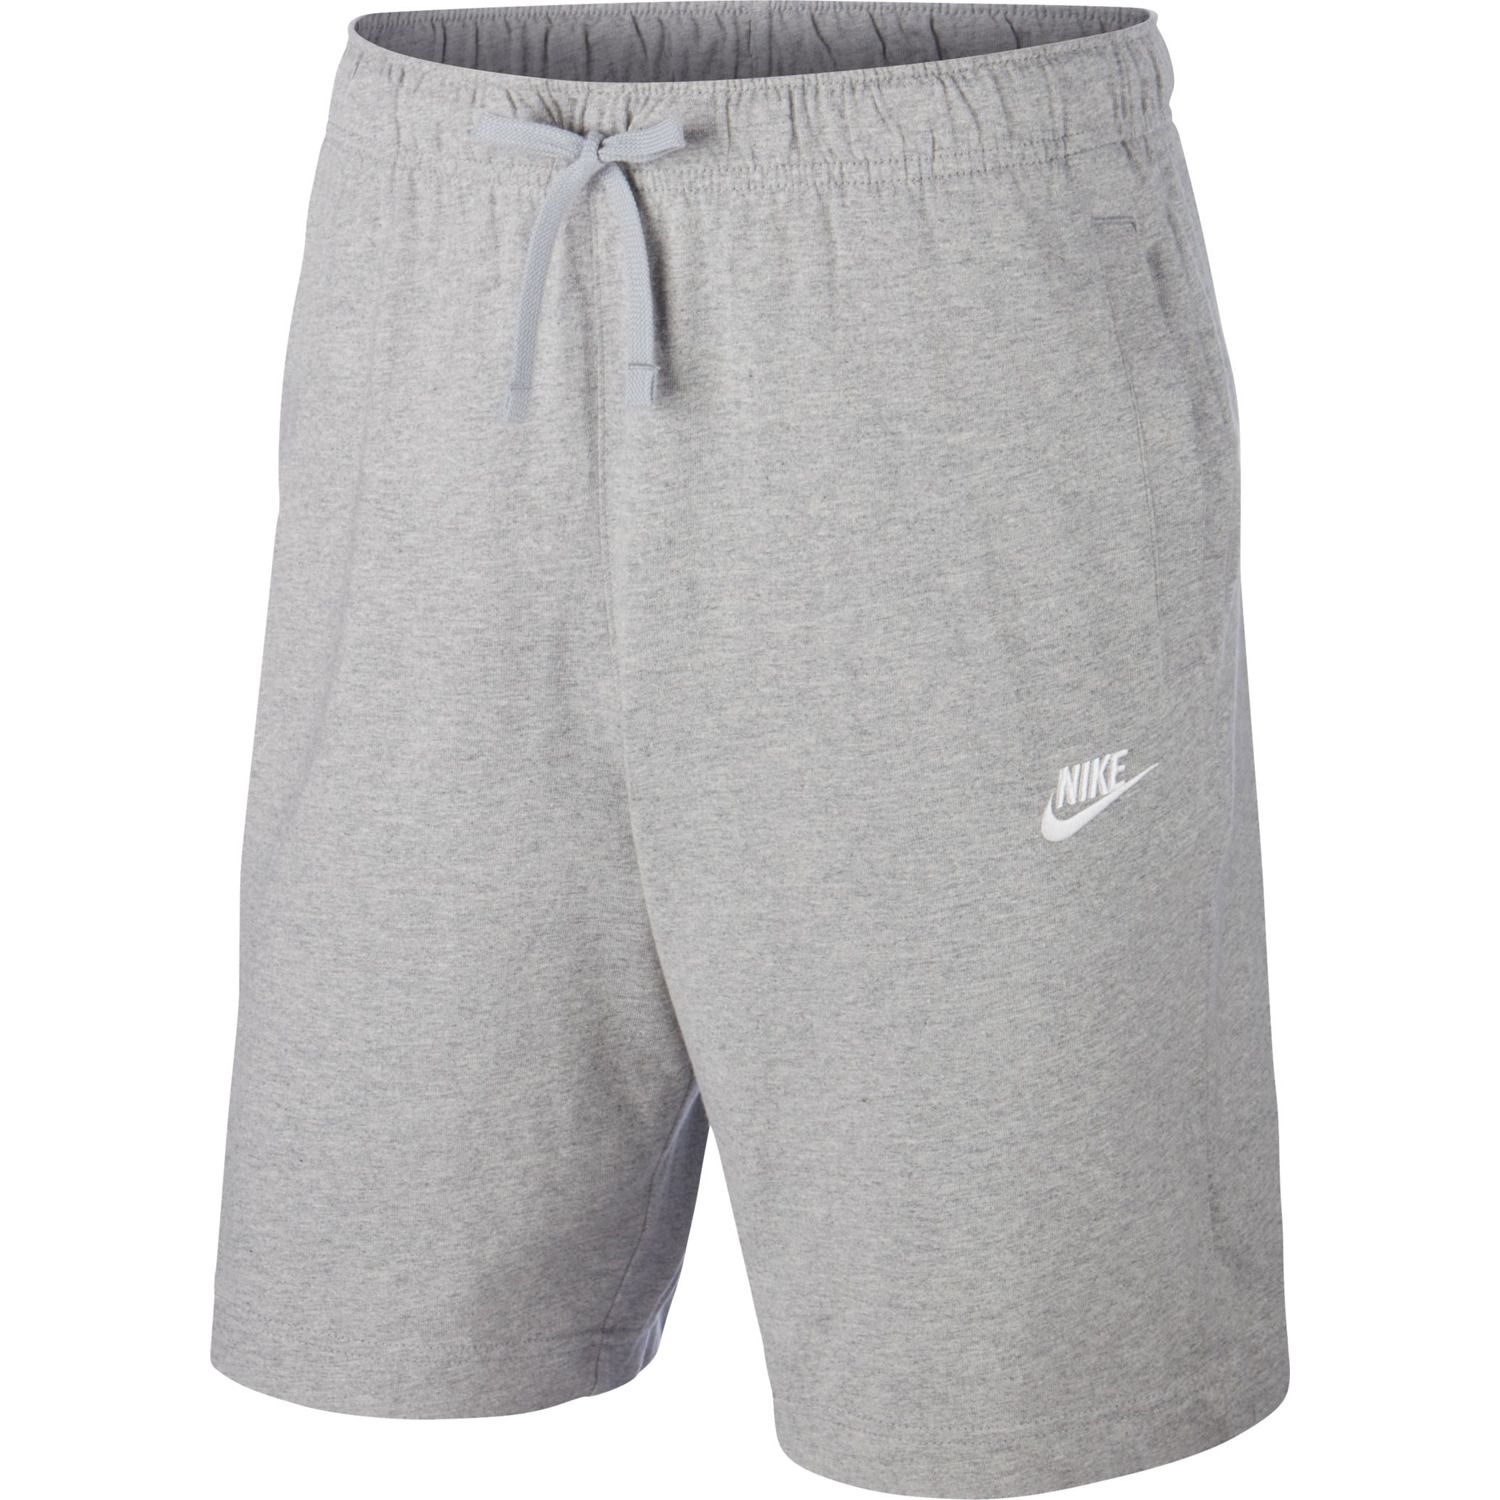 nike grey sweat shorts mens